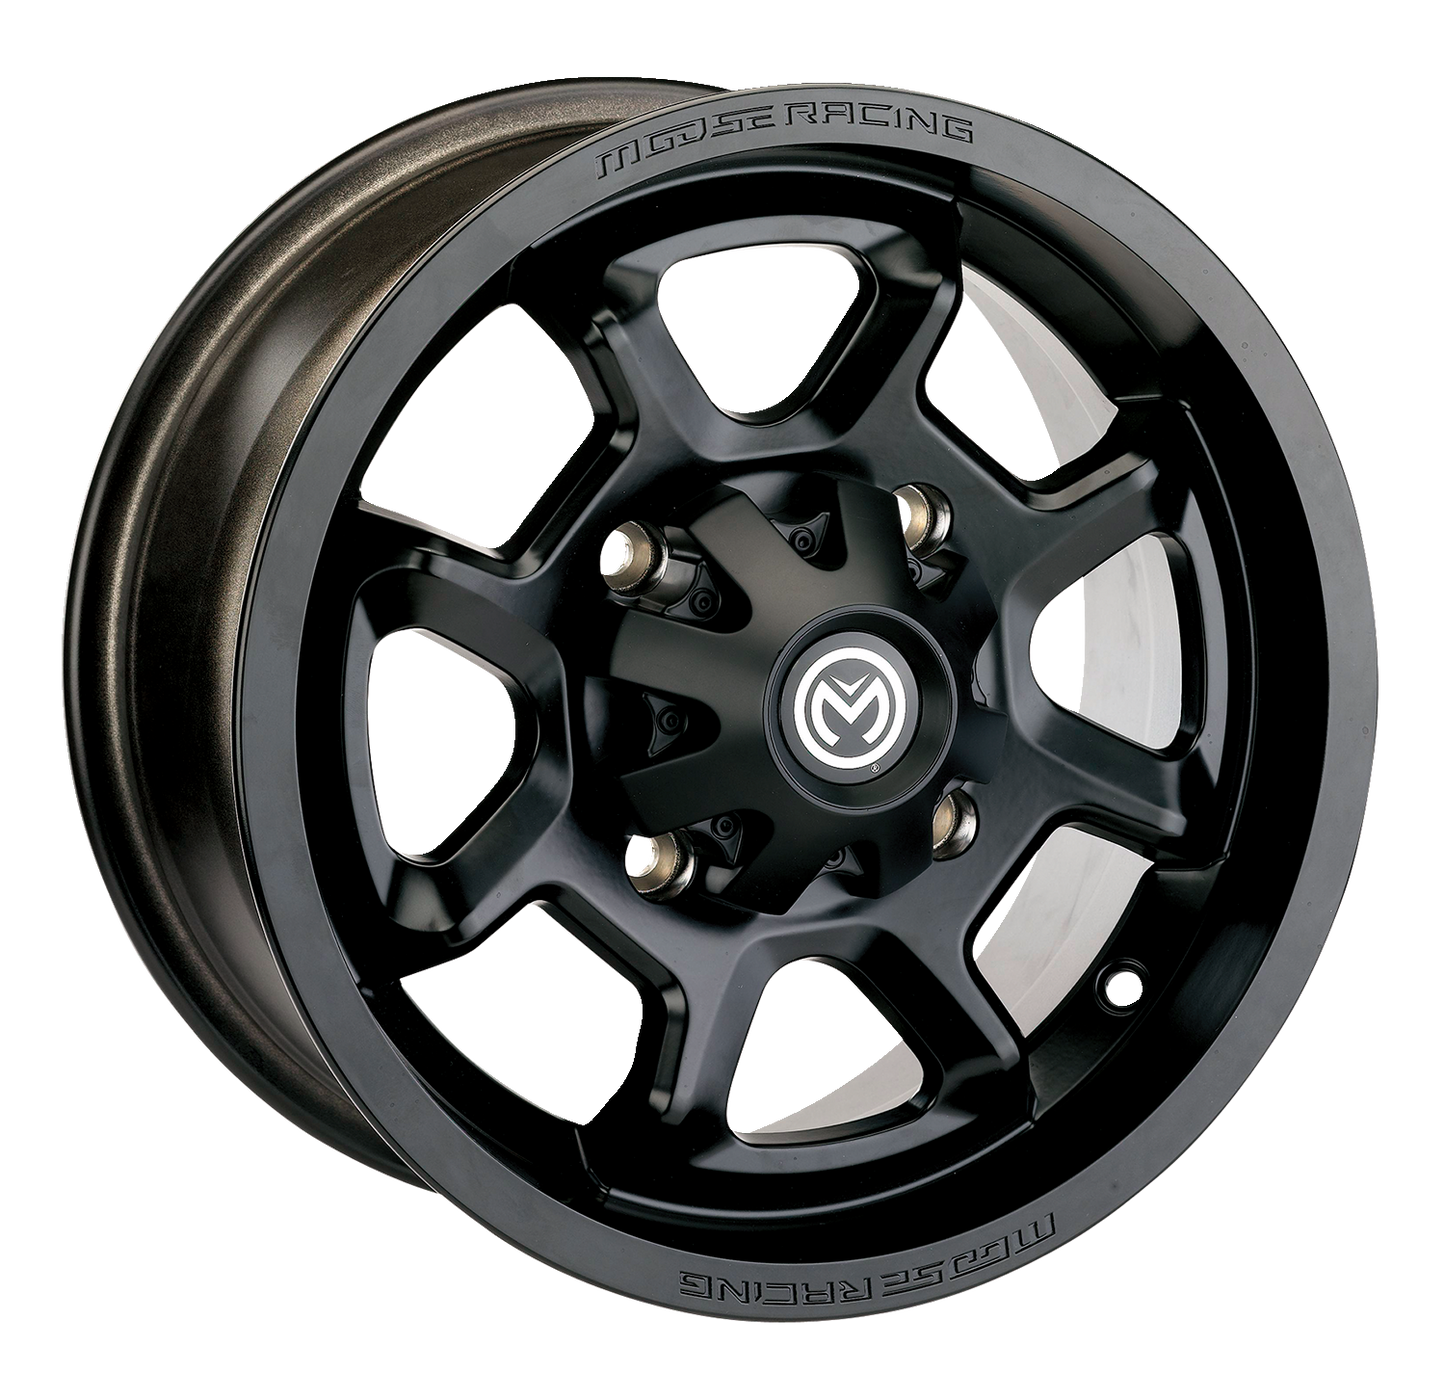 MOOSE UTILITY Wheel - 415X - Front/Rear - Black - 14x7 - 4/136 - 5+2 415MO147136MB55